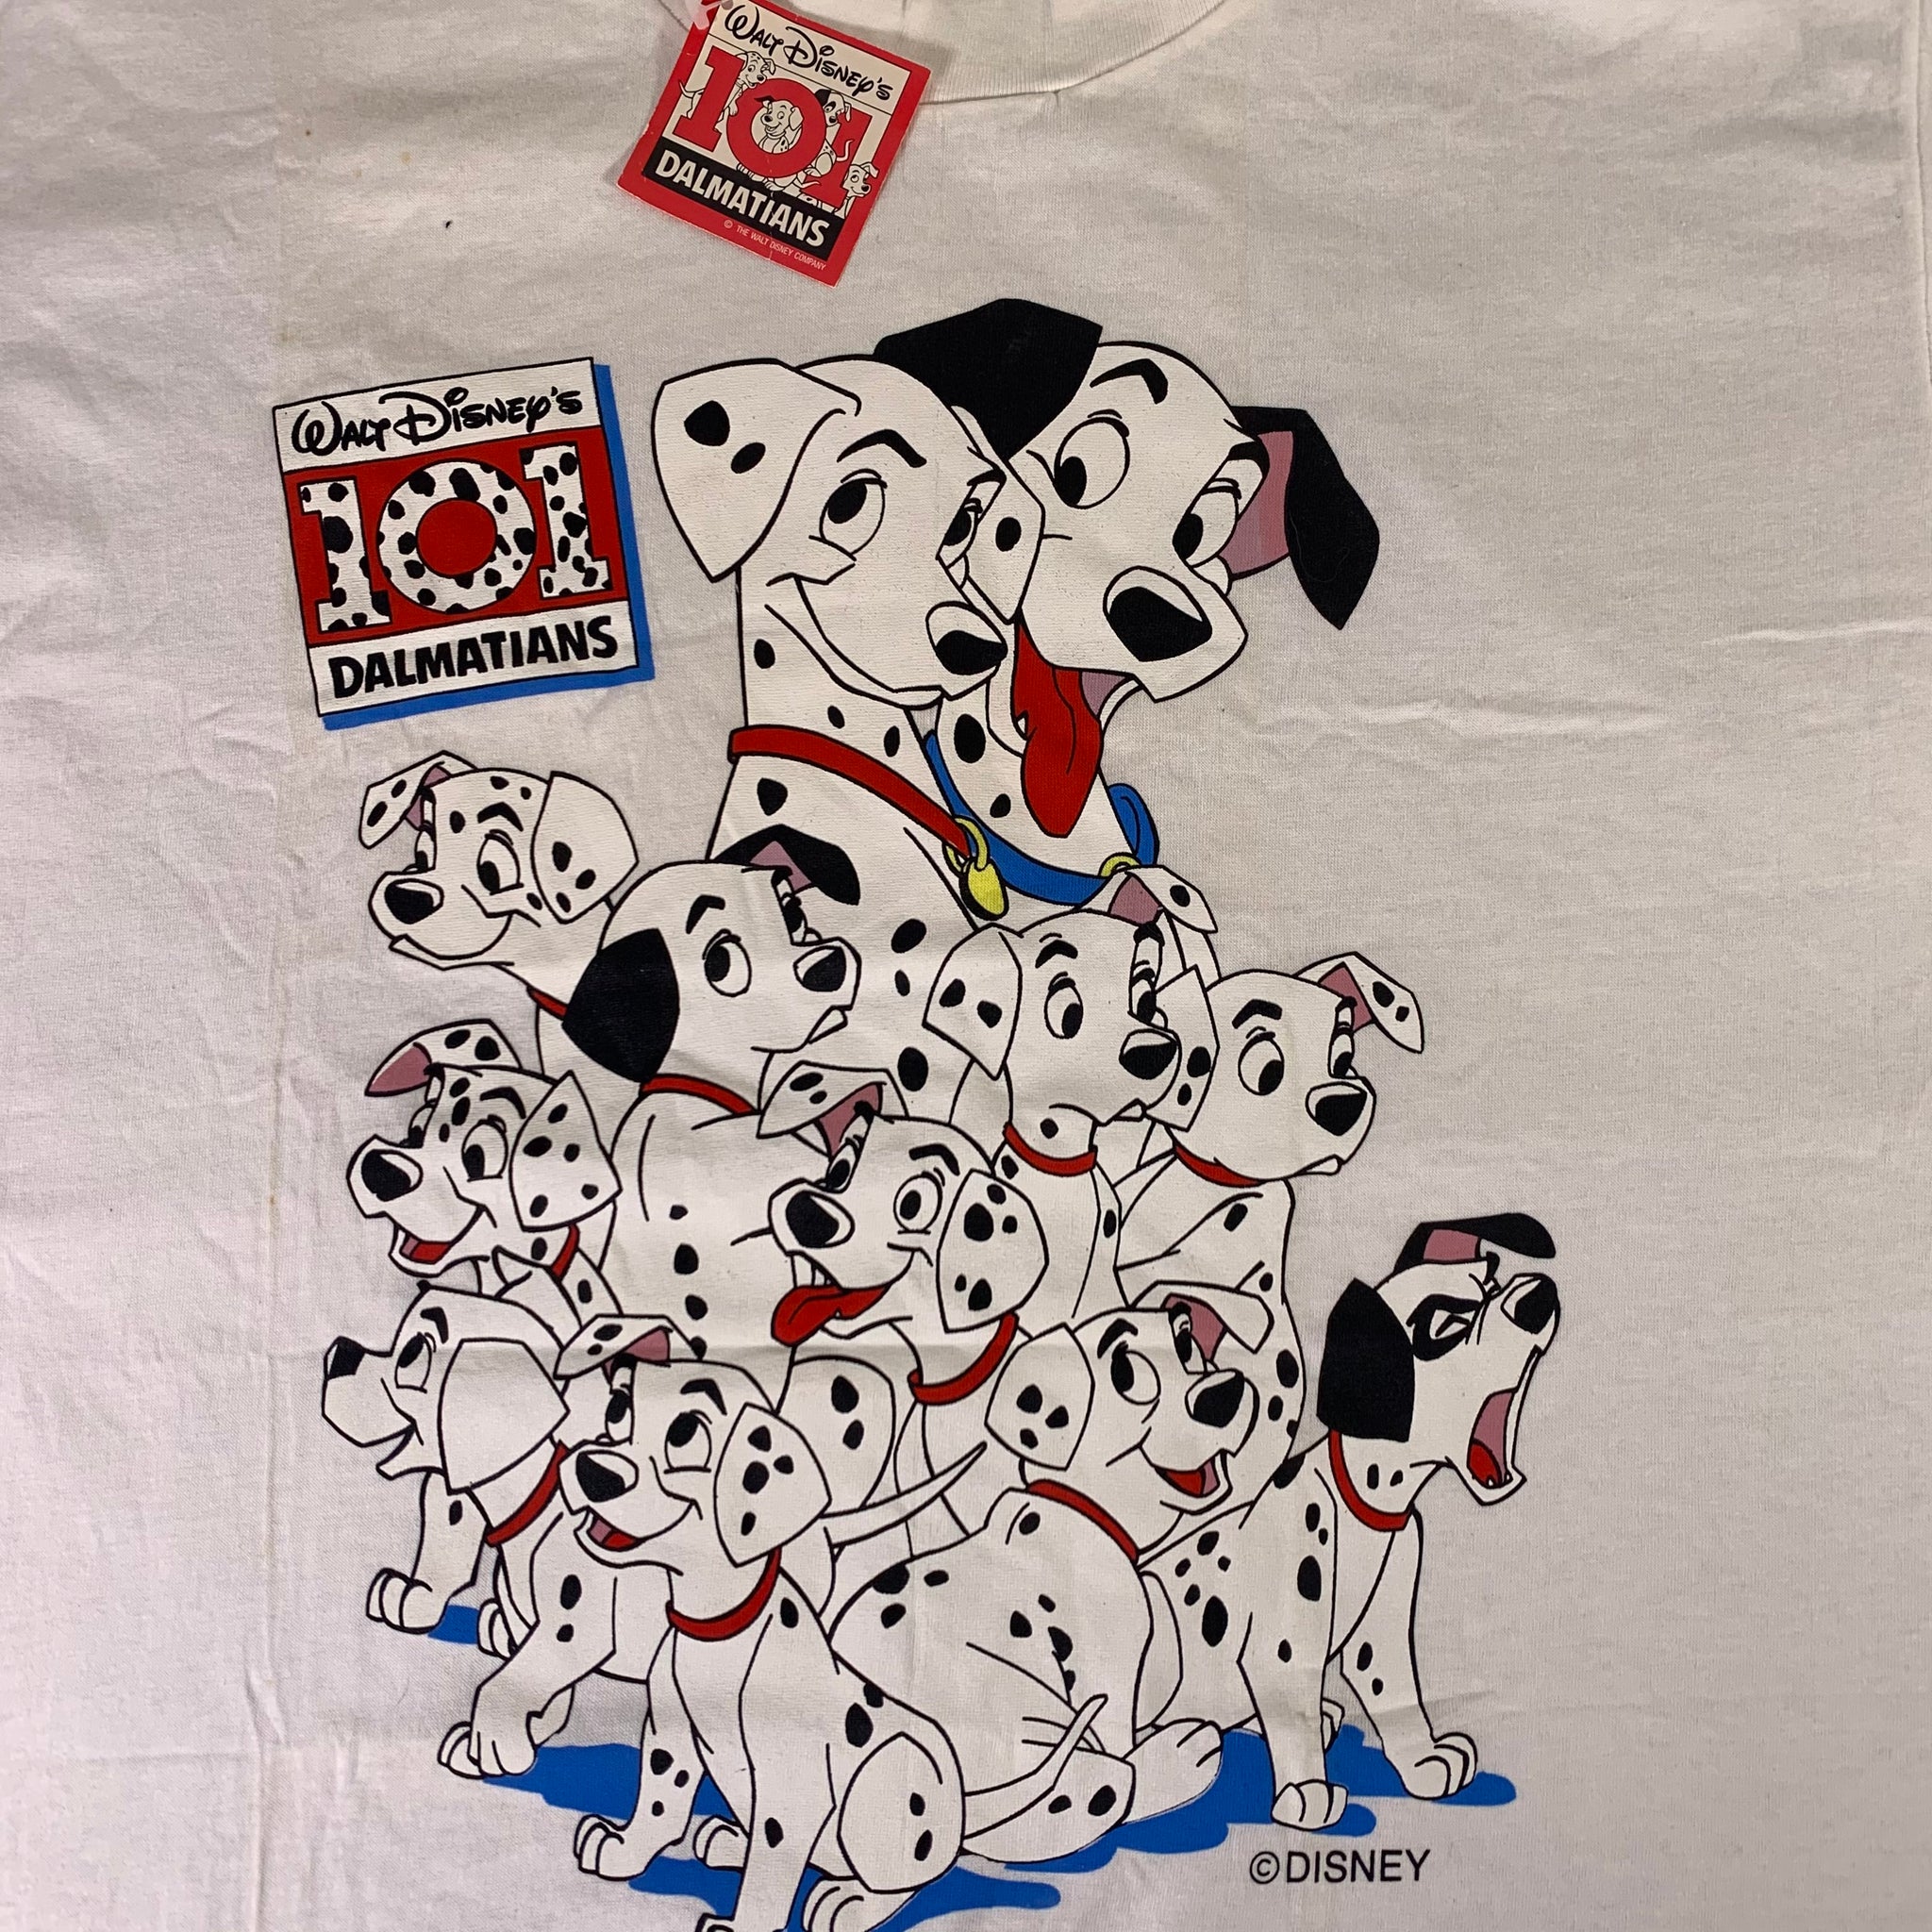 101 Dalmatians Graphic T-Shirt by esteesdave